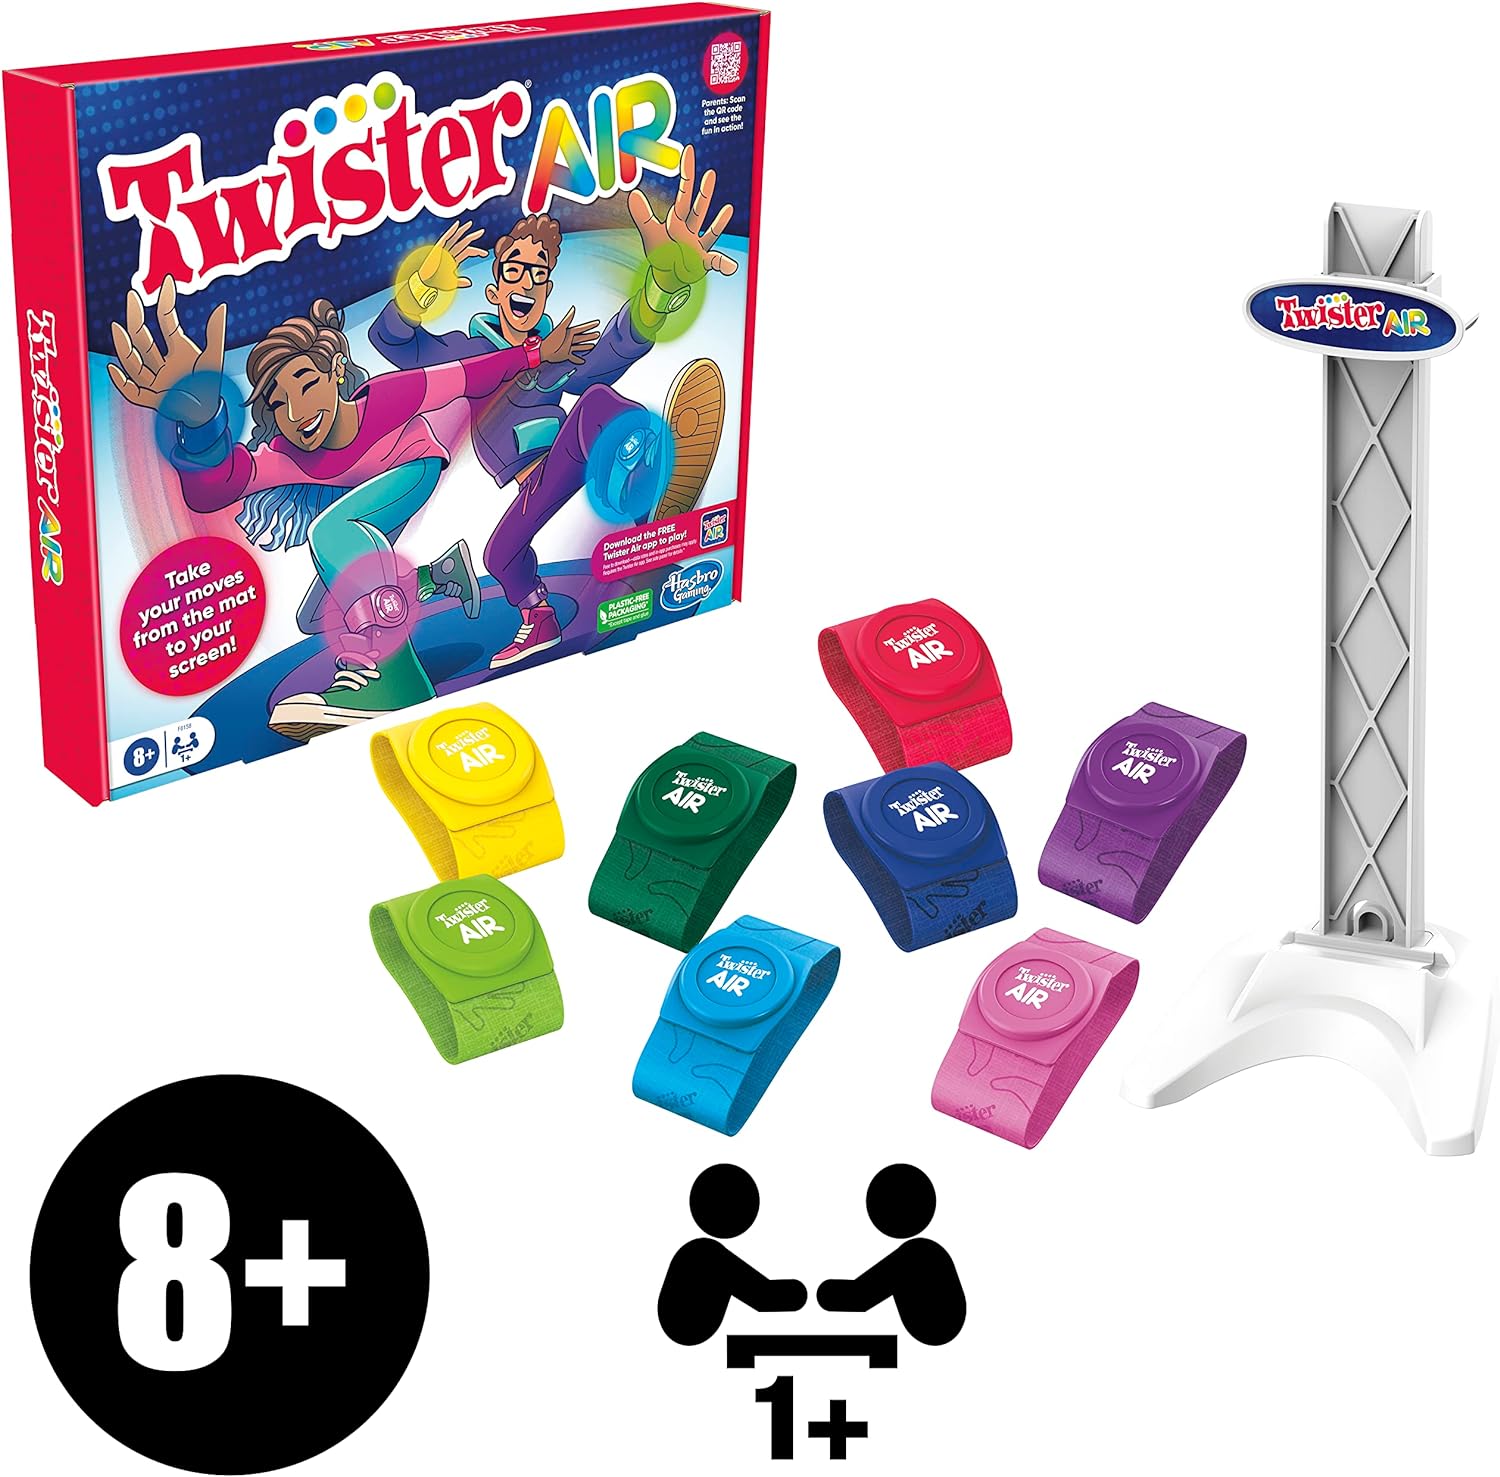 Hasbro Gaming - Twister Air Game